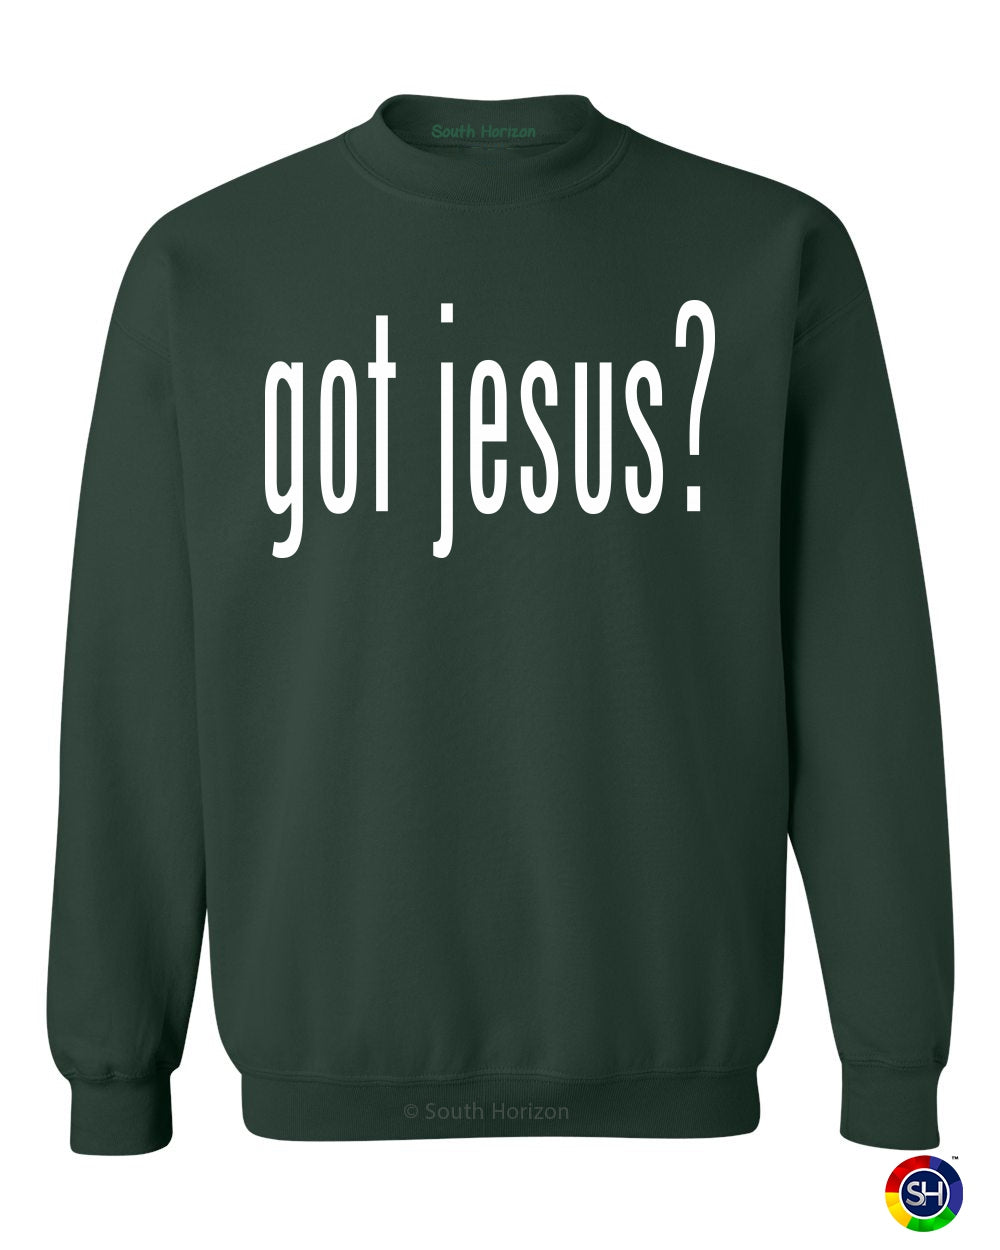 GOT JESUS? on SweatShirt (#366-11)